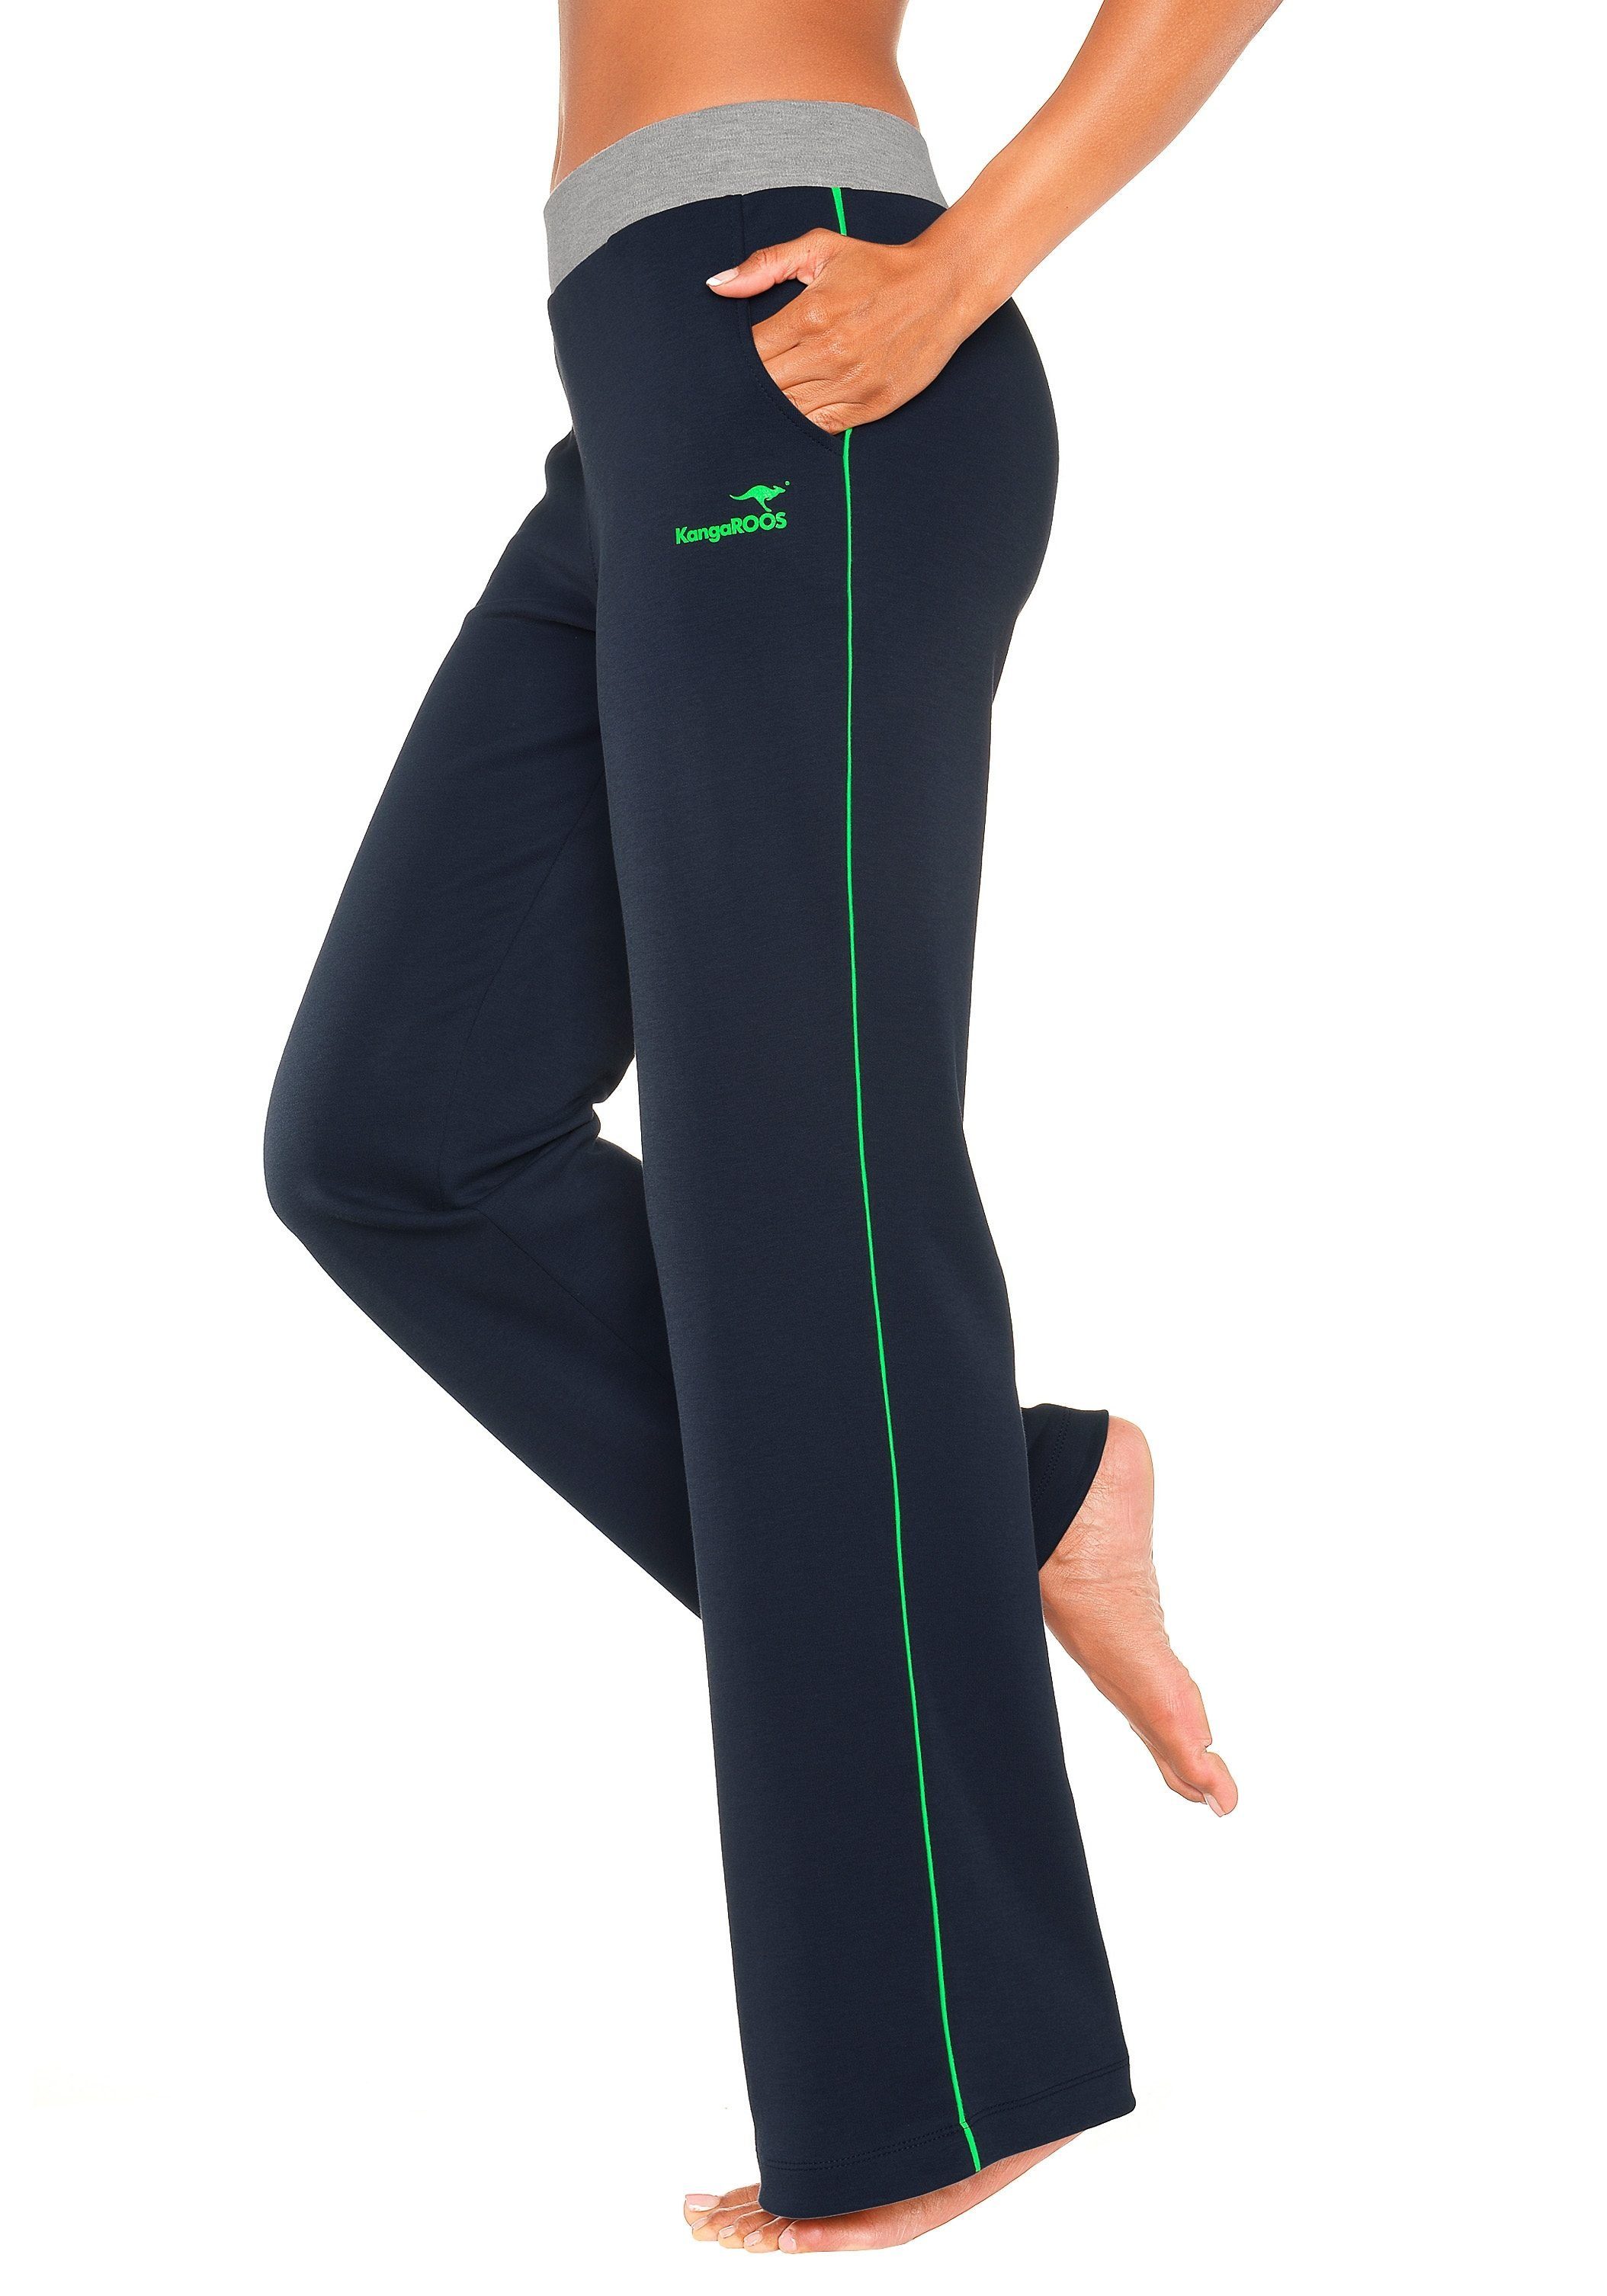 KangaROOS Relaxhose mit breitem Bund, Loungewear, marine-grün-grün Loungeanzug